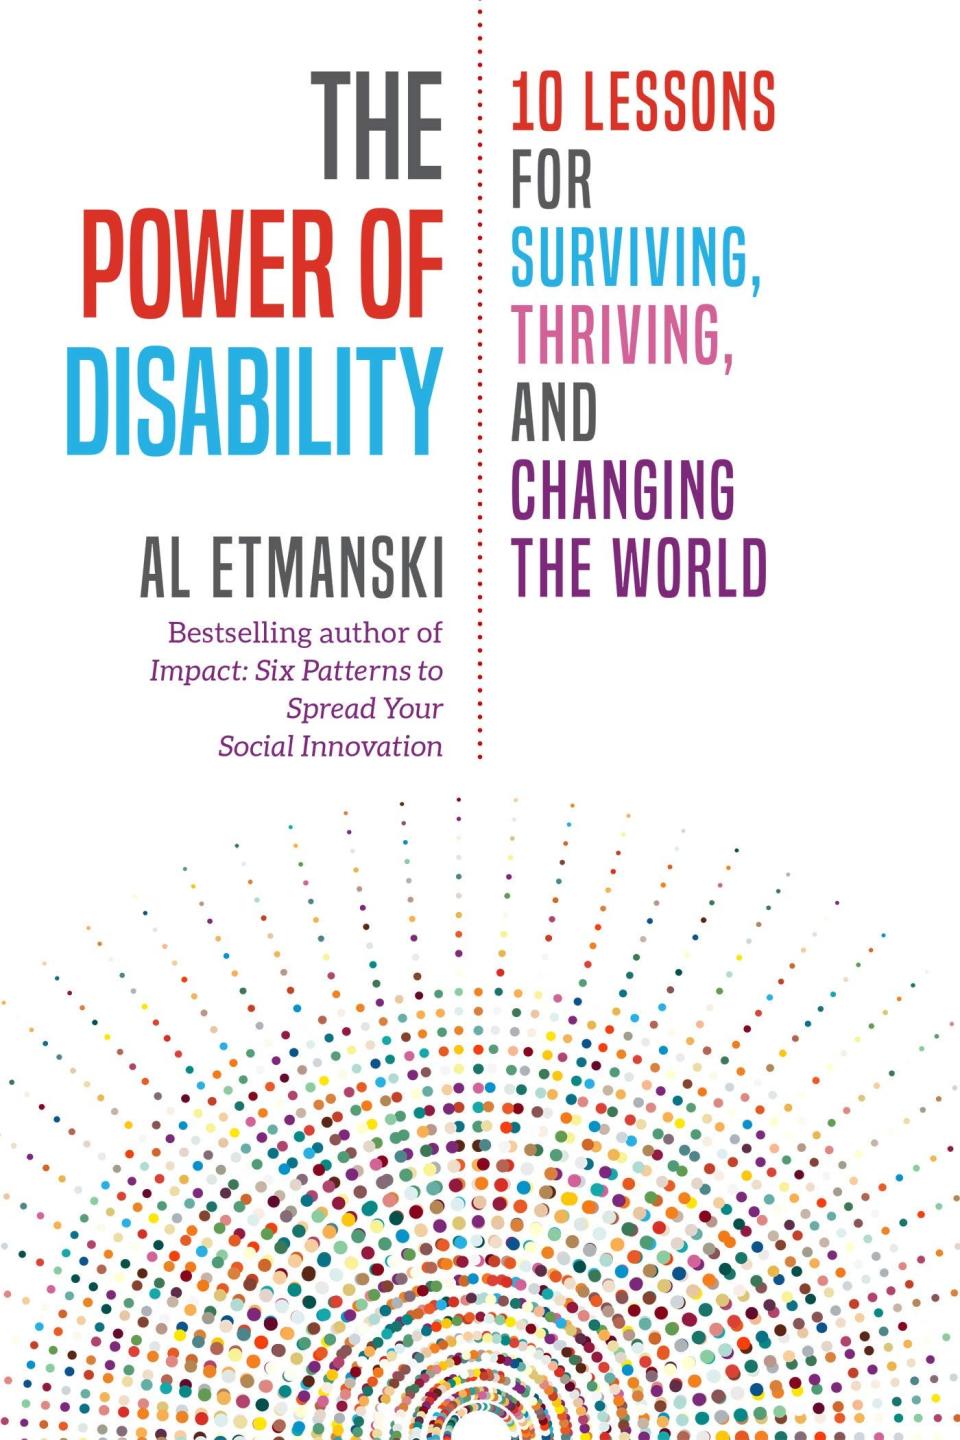 ‘The Power of Disability’ by Al Etmanski